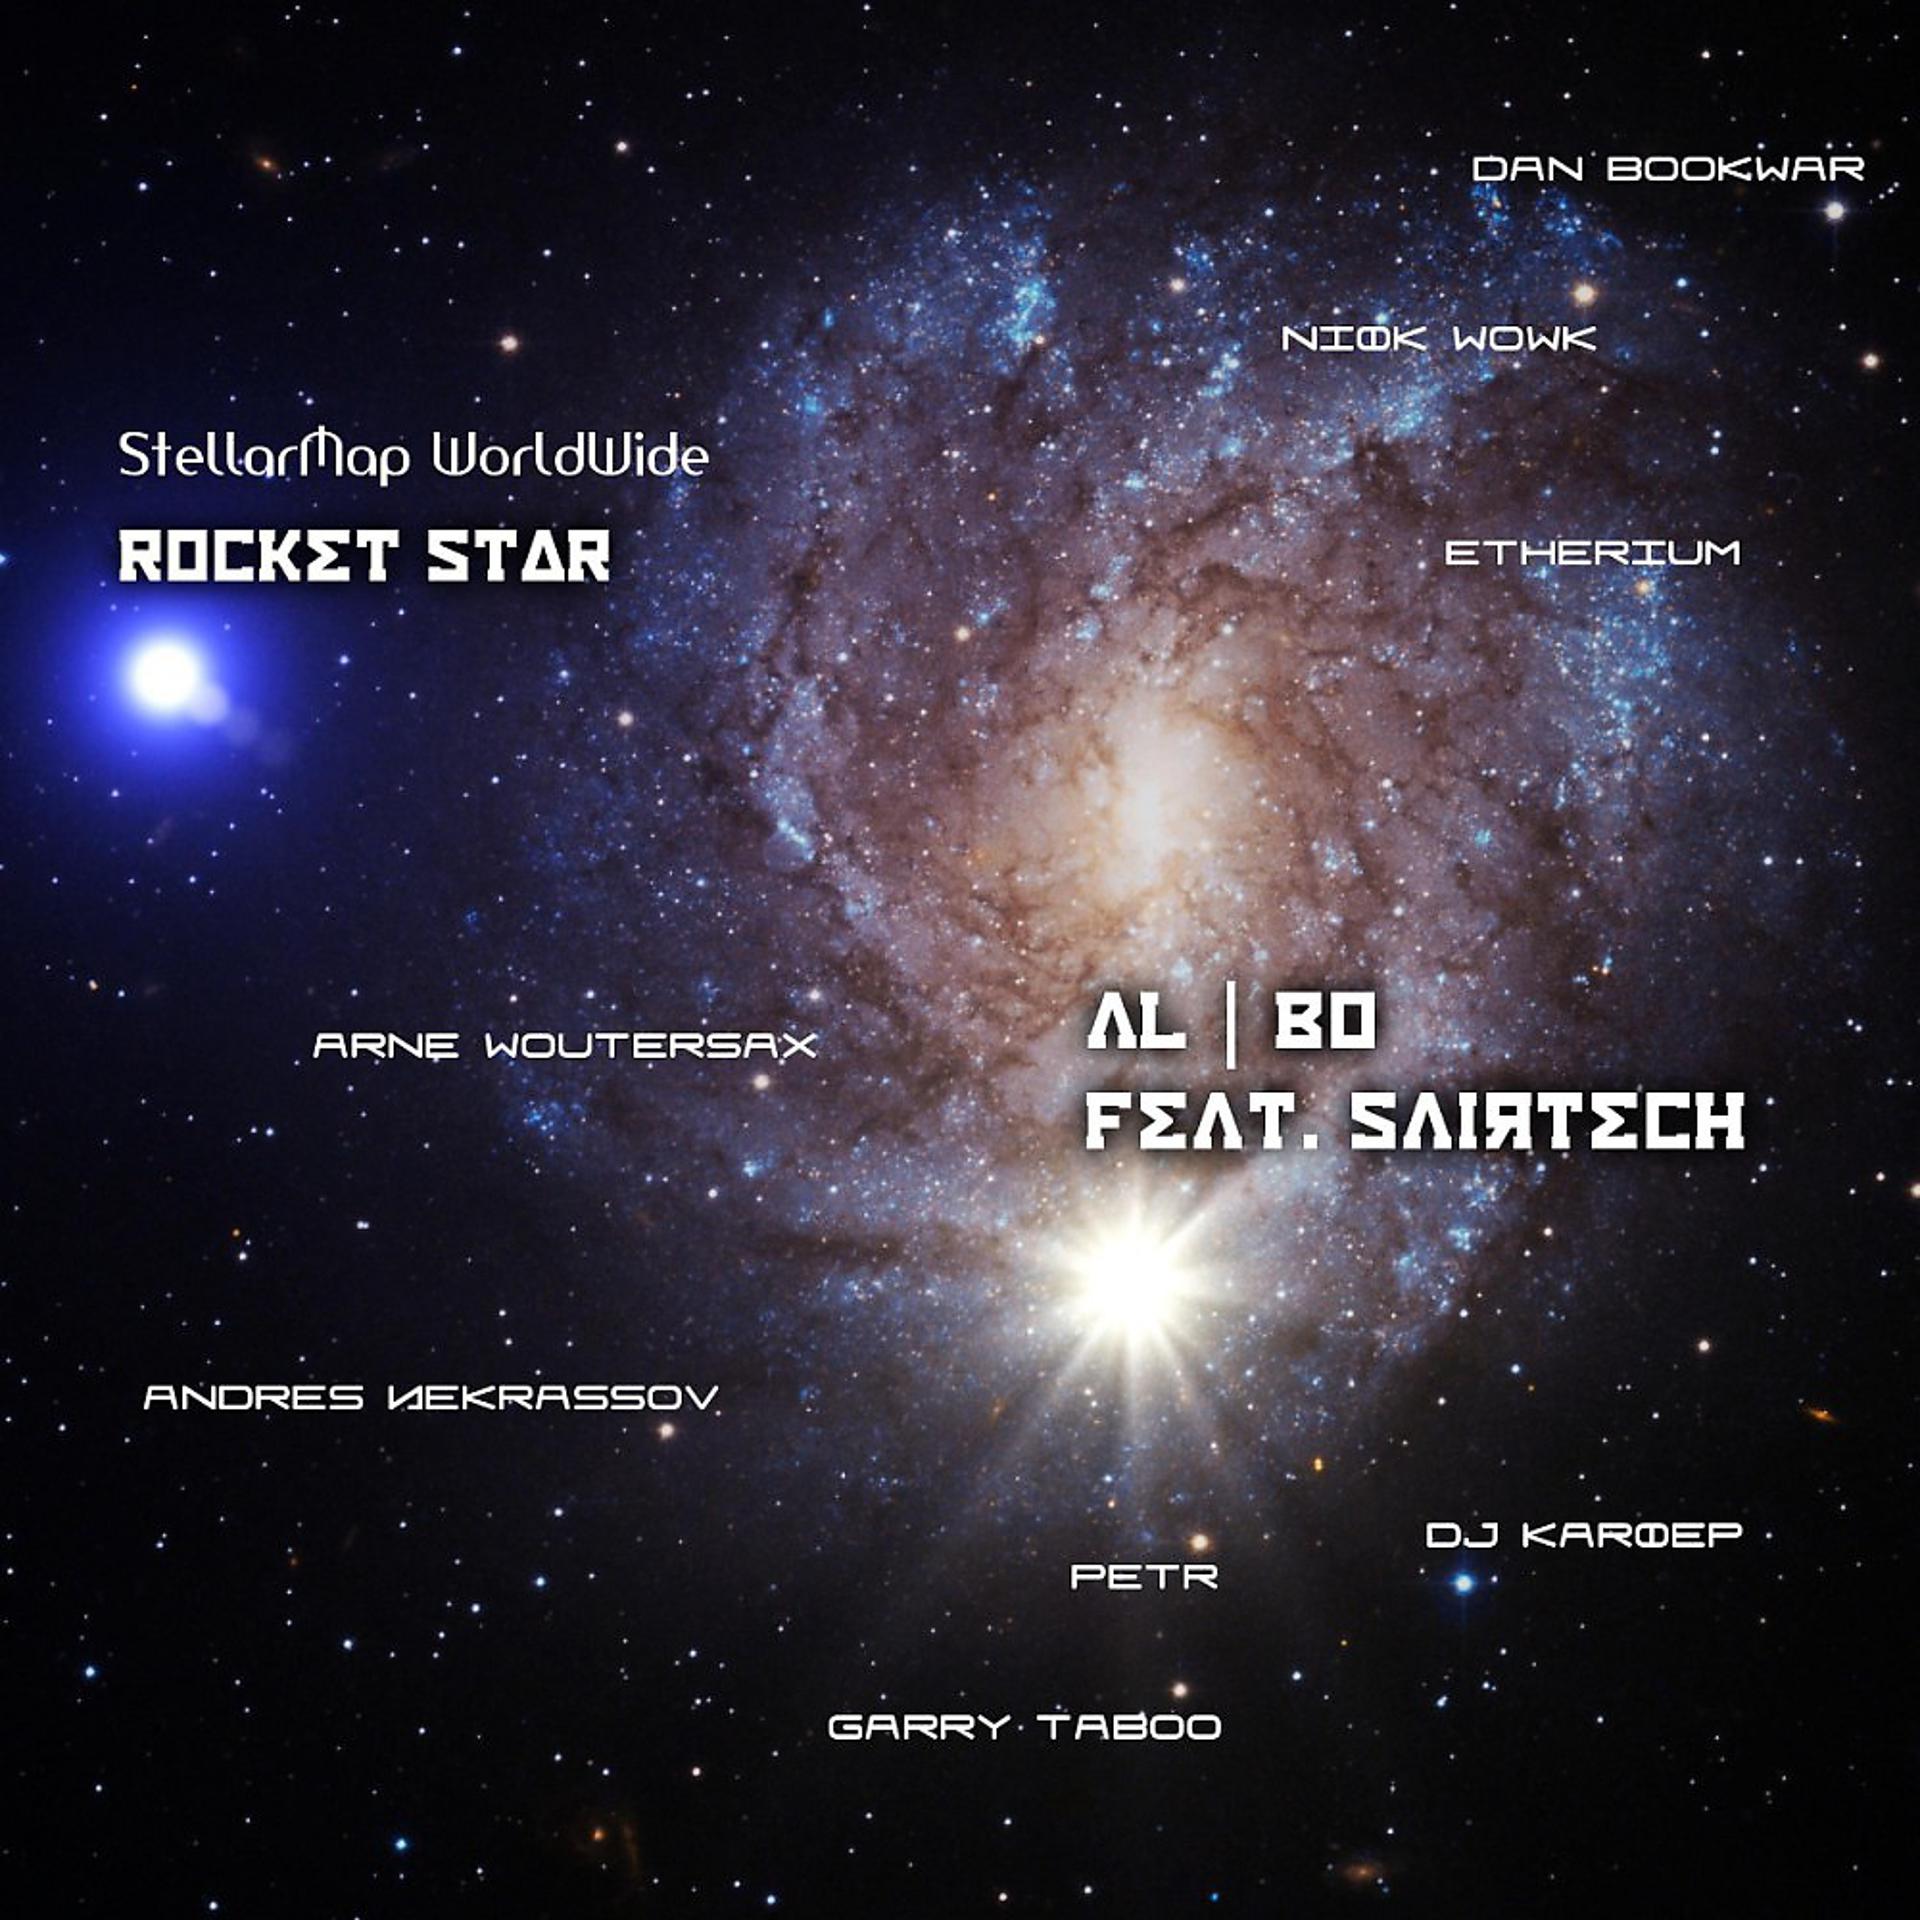 Постер к треку al l bo, Sairtech - Rocket Star (DJ Karcep and Petr Version)